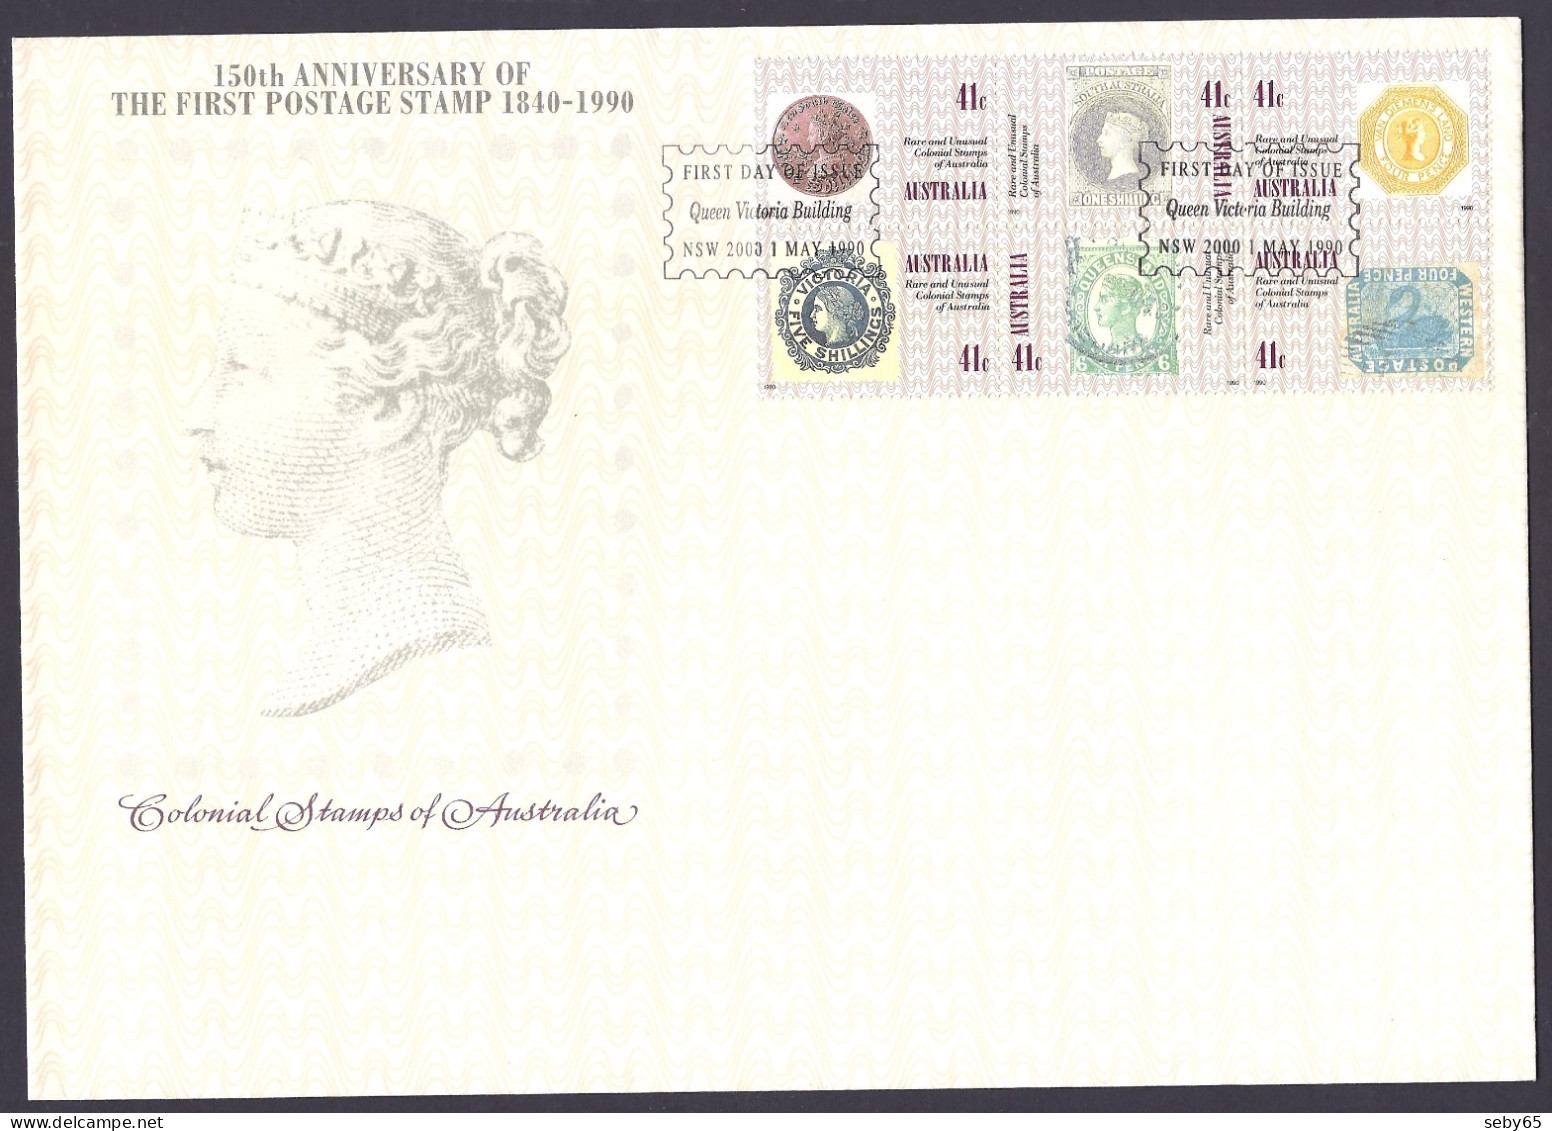 Australia 1990 - 150th Anniversary First Postage Stamp, Colonial Stamps, Rare And Unusual - FDC - Primo Giorno D'emissione (FDC)